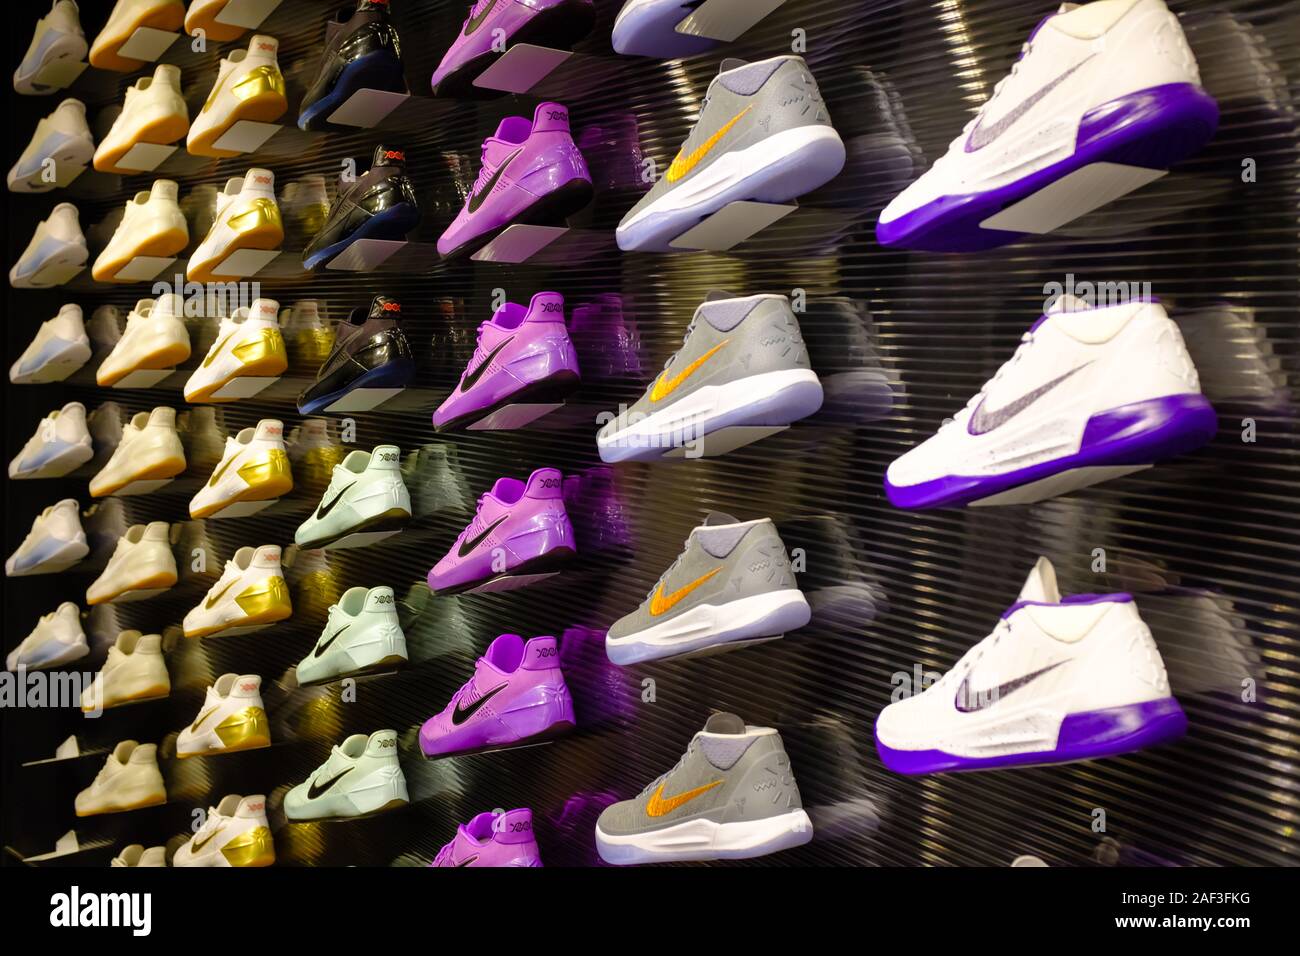 Singapore-21 JAN 2017: Nike shoes Kobe series display in shopping mall  Stock Photo - Alamy